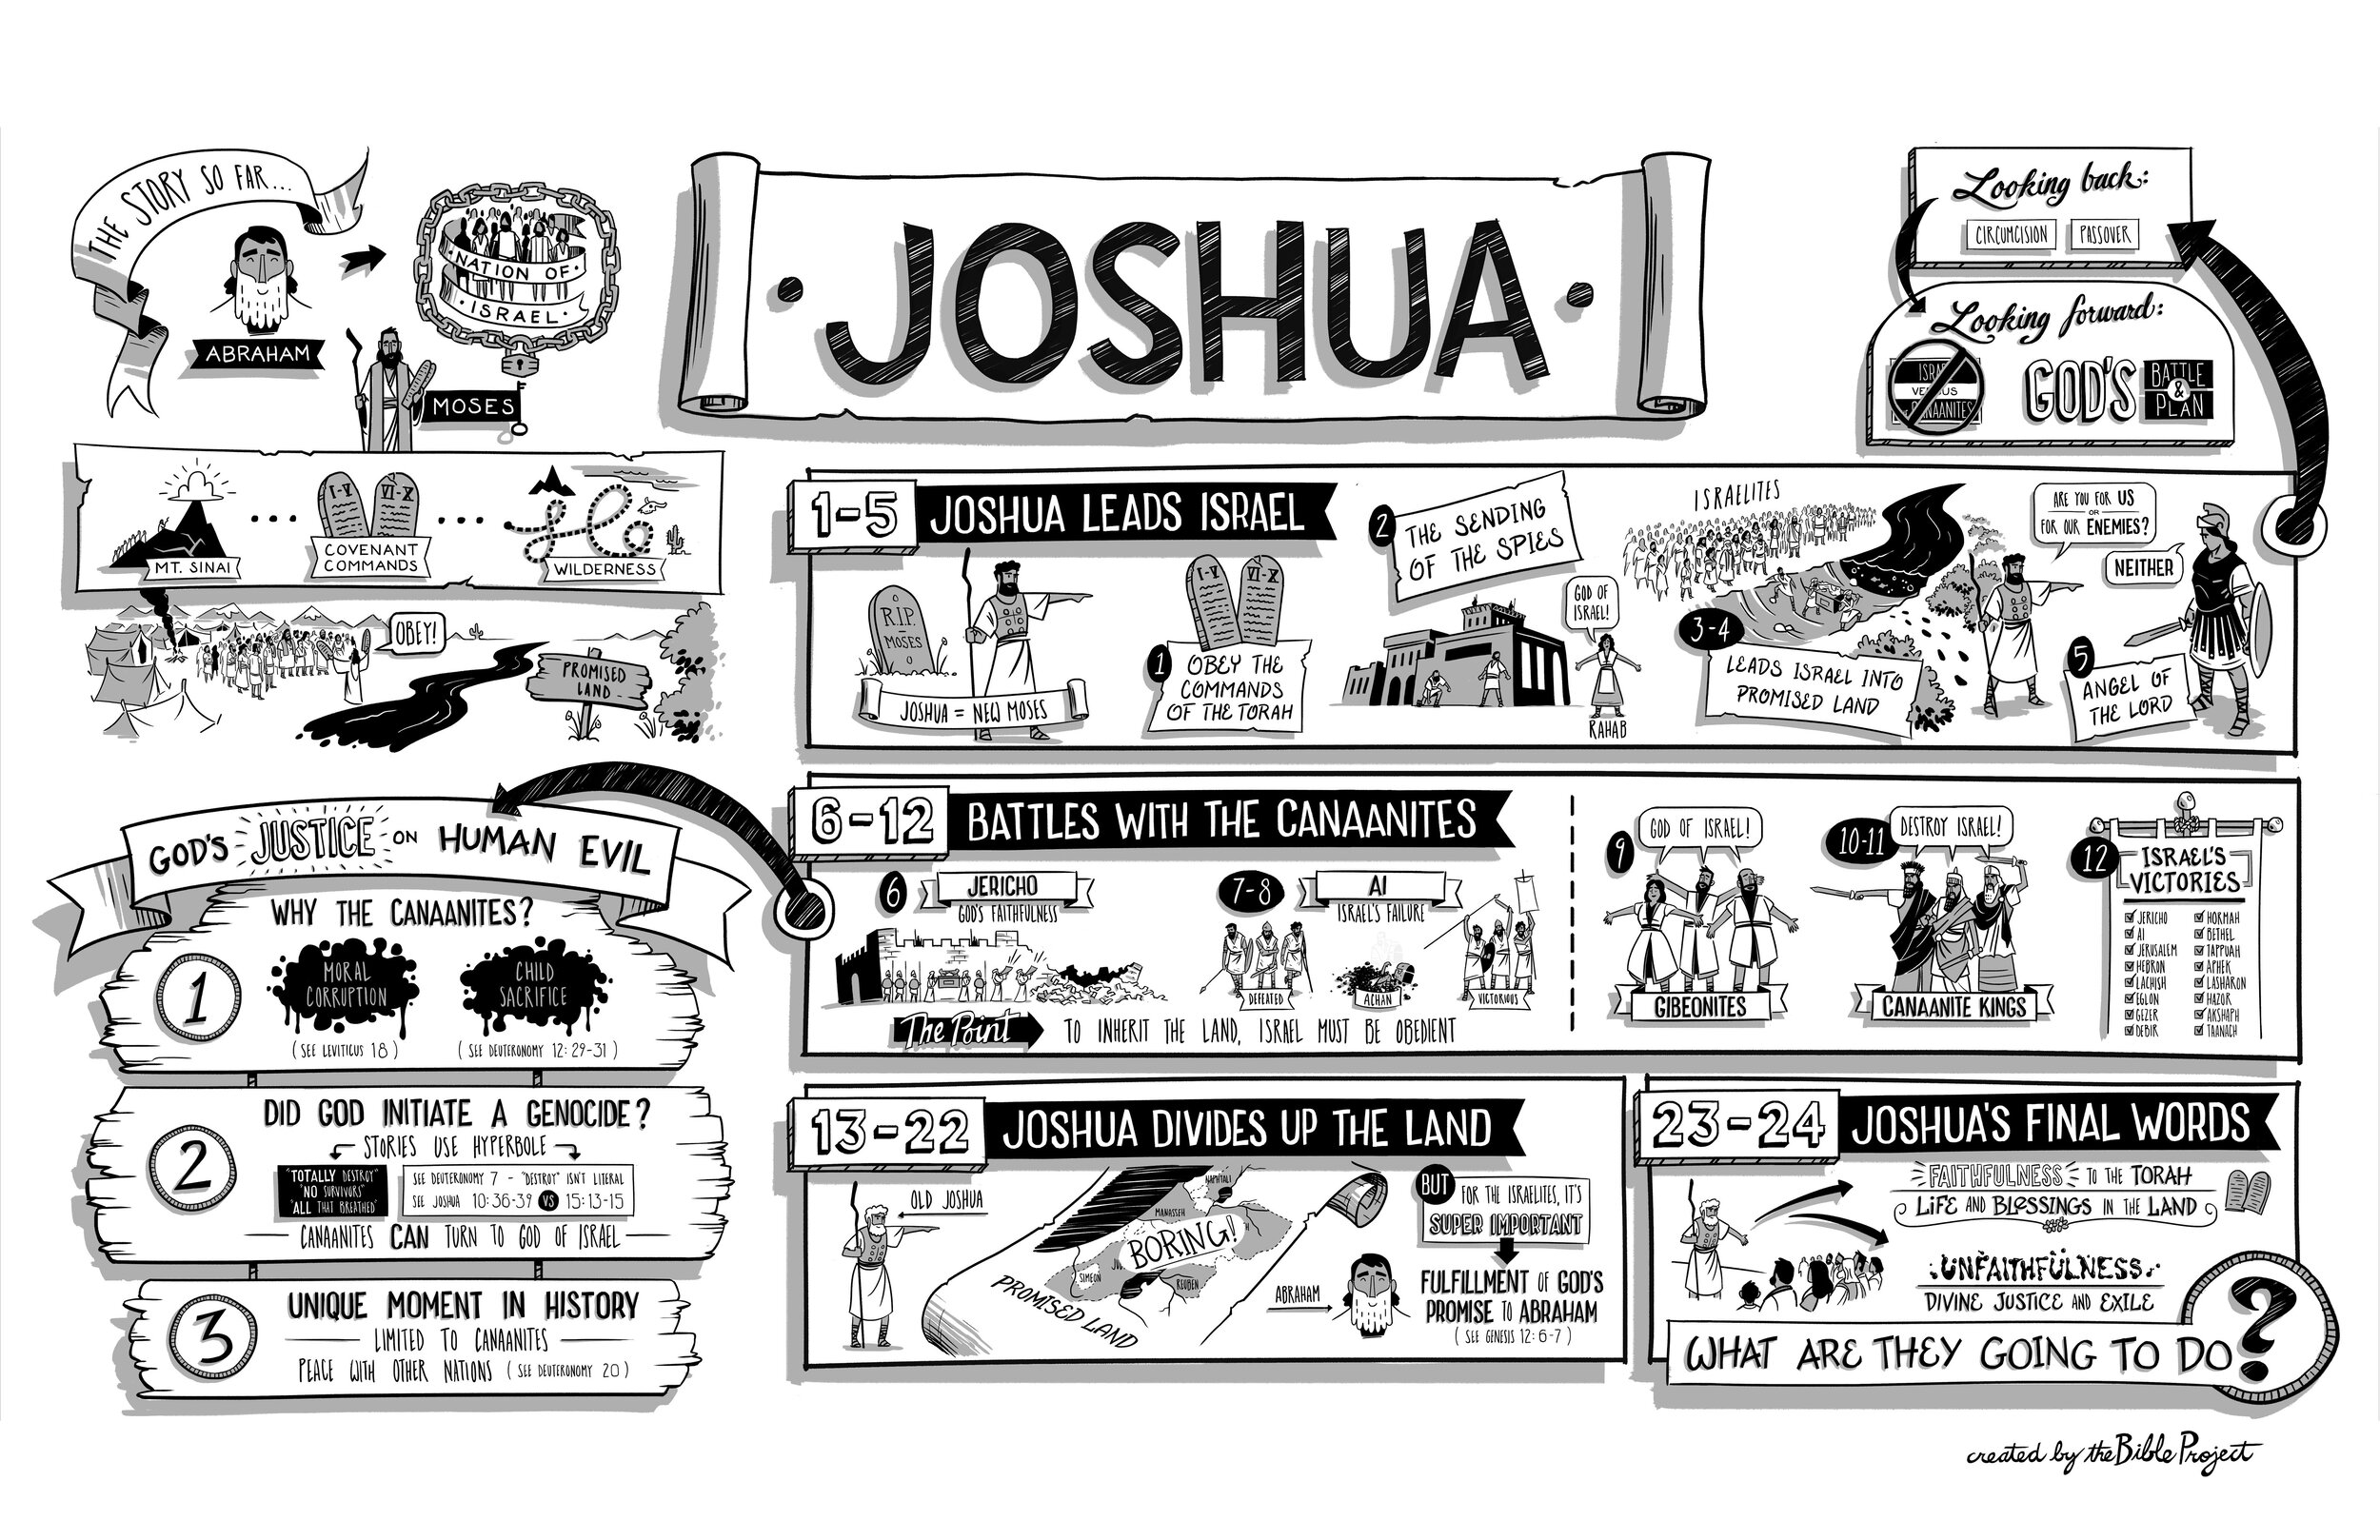 BibleProject: Joshua (Video)